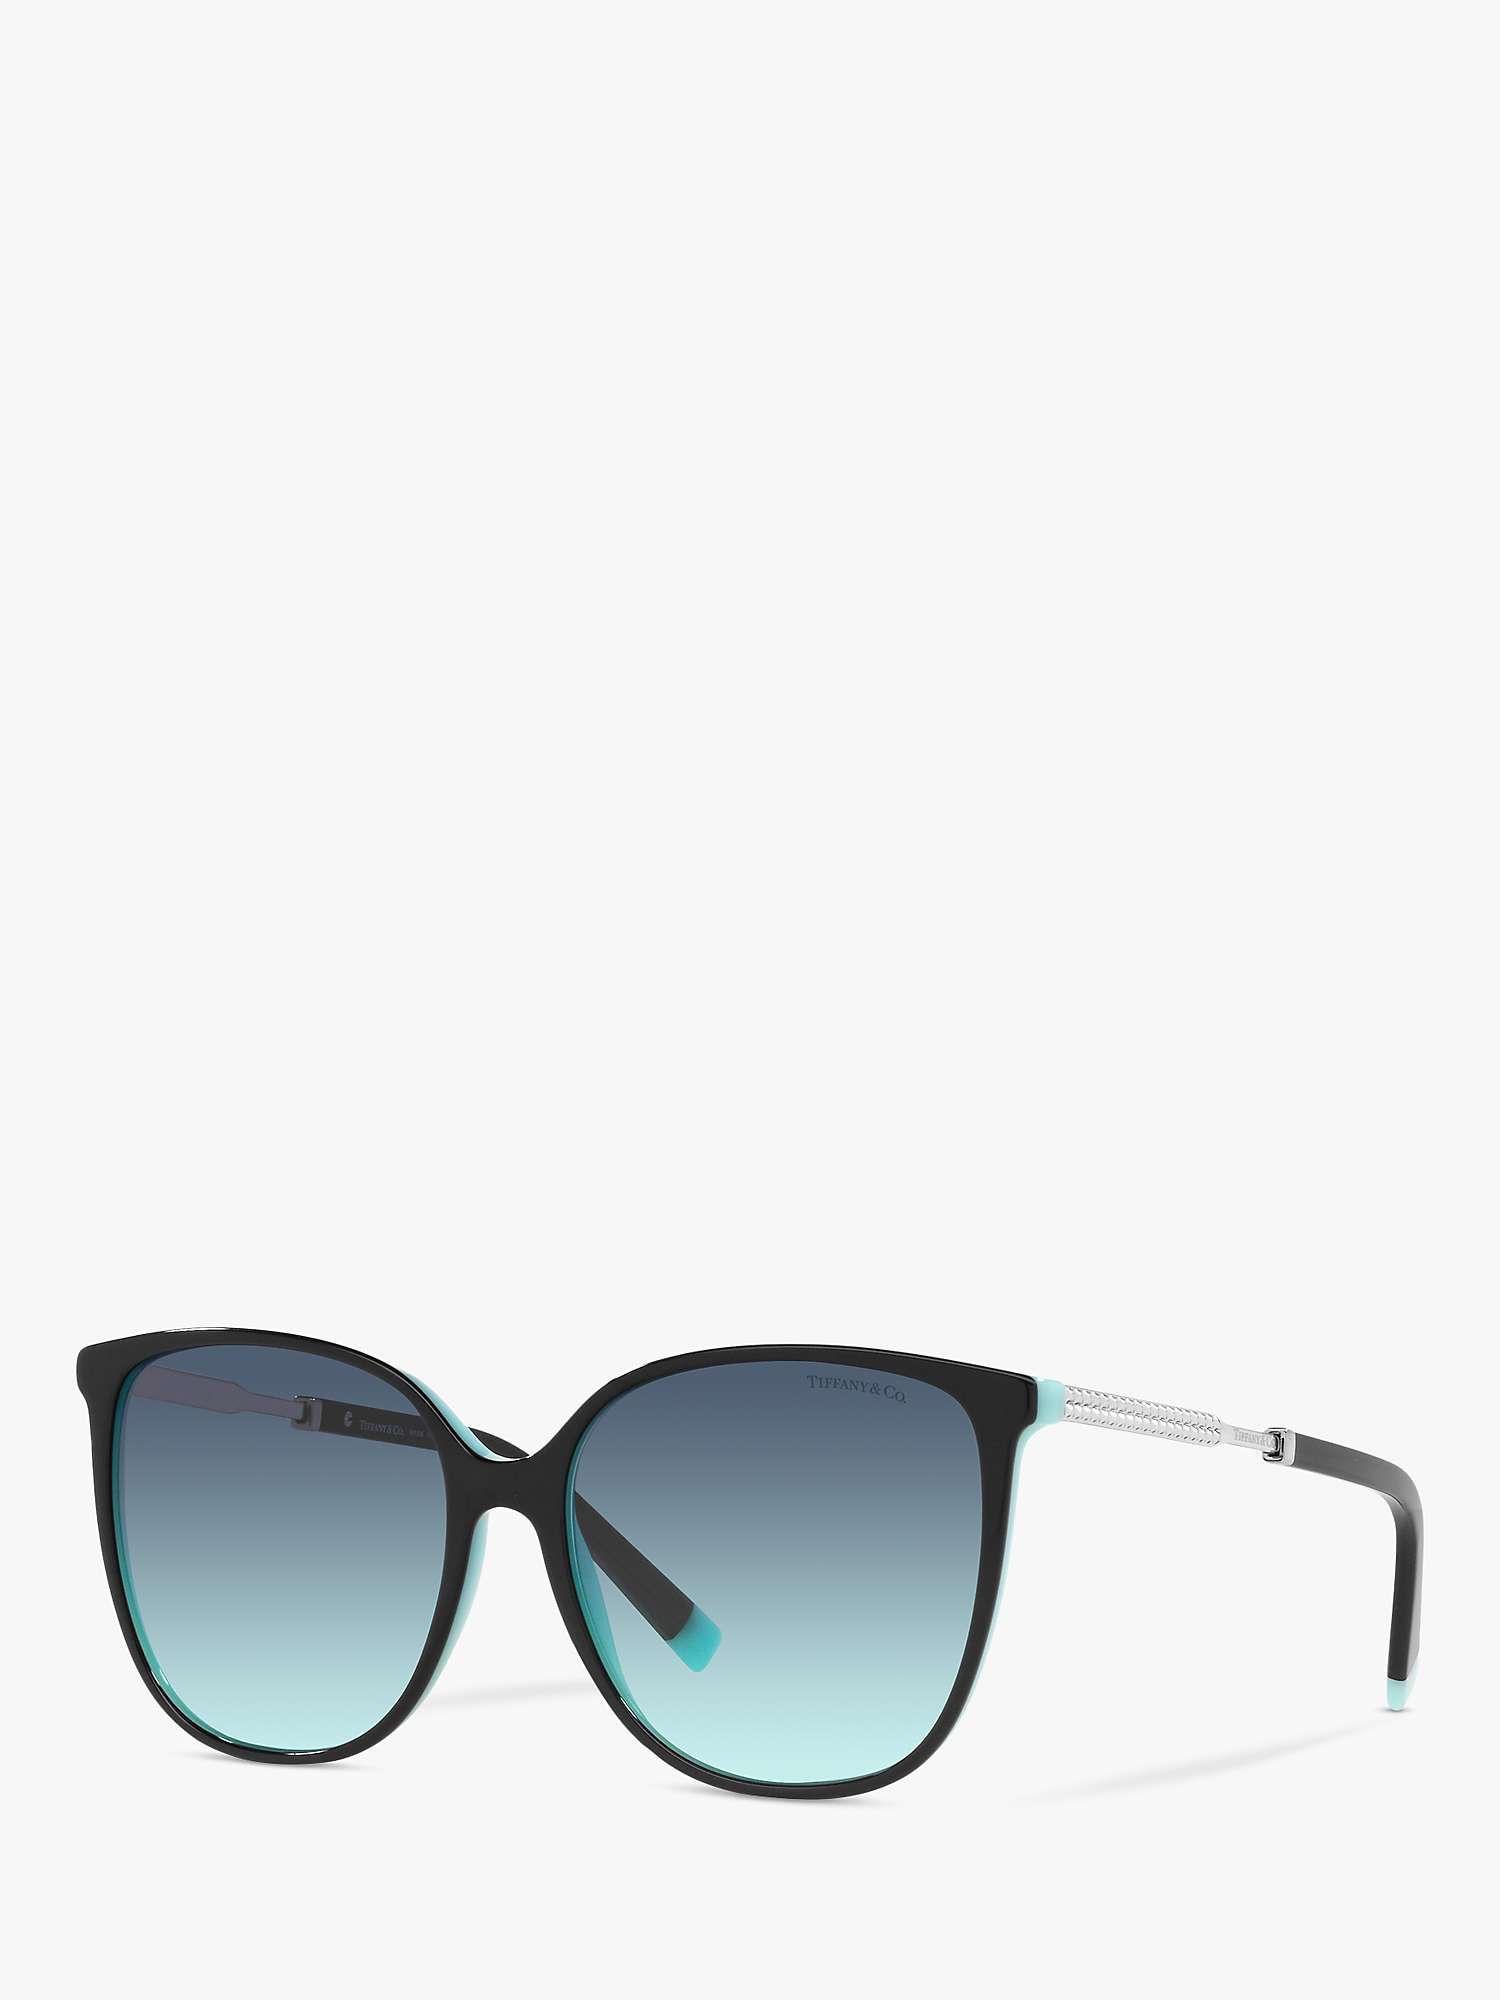 Buy Tiffany & Co TF4184 Women's Oval Sunglasses, Black/Blue Gradient Online at johnlewis.com